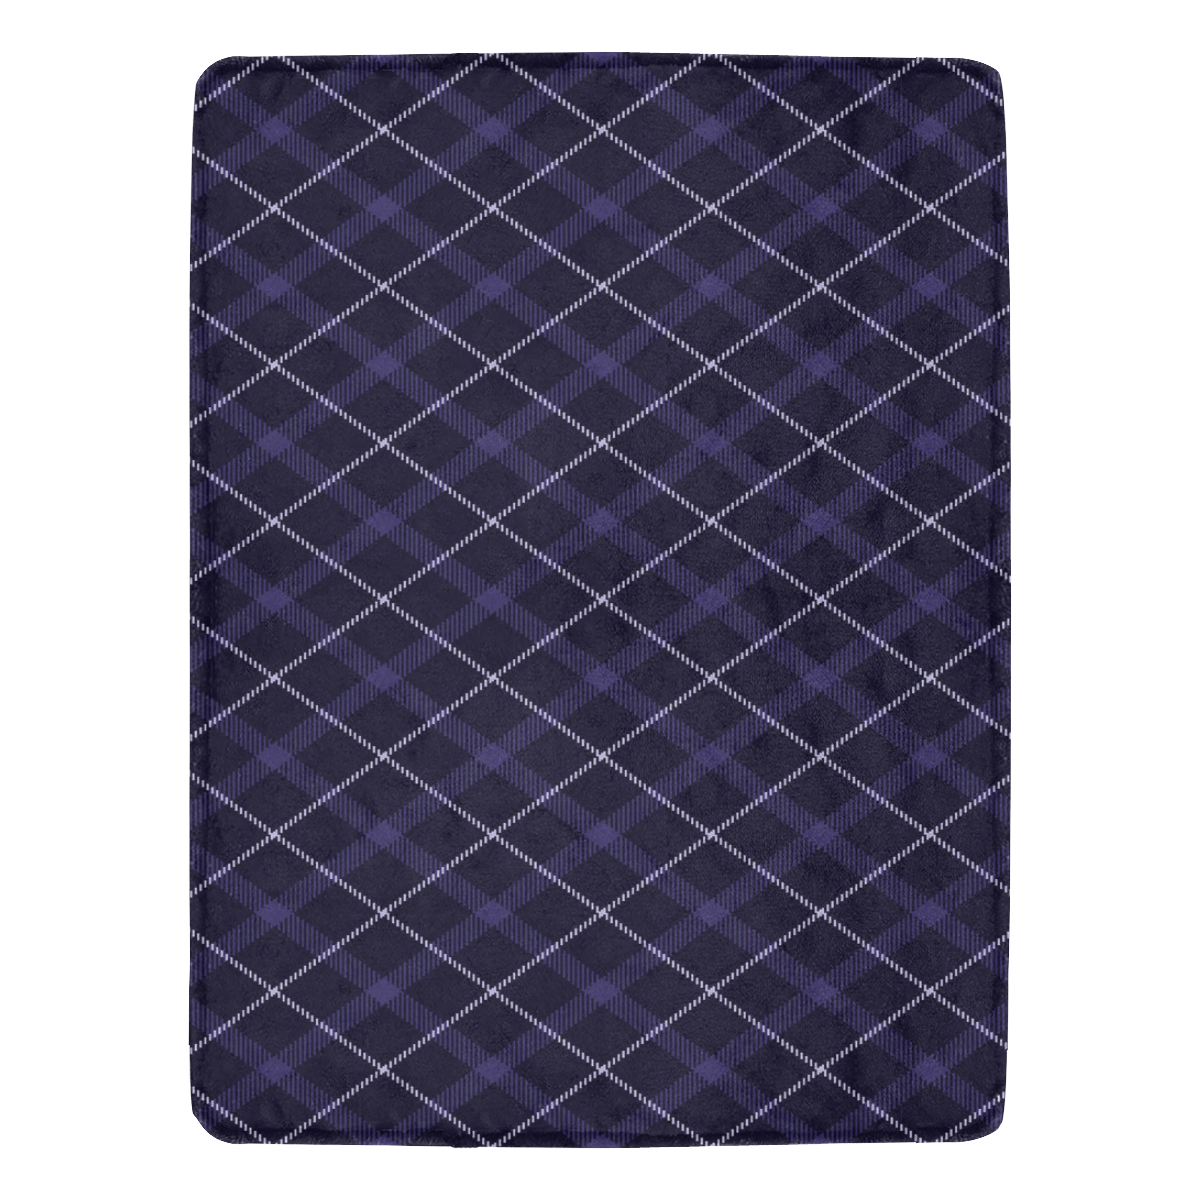 royal blue plaid diagonal tartan Ultra-Soft Micro Fleece Blanket 60"x80"